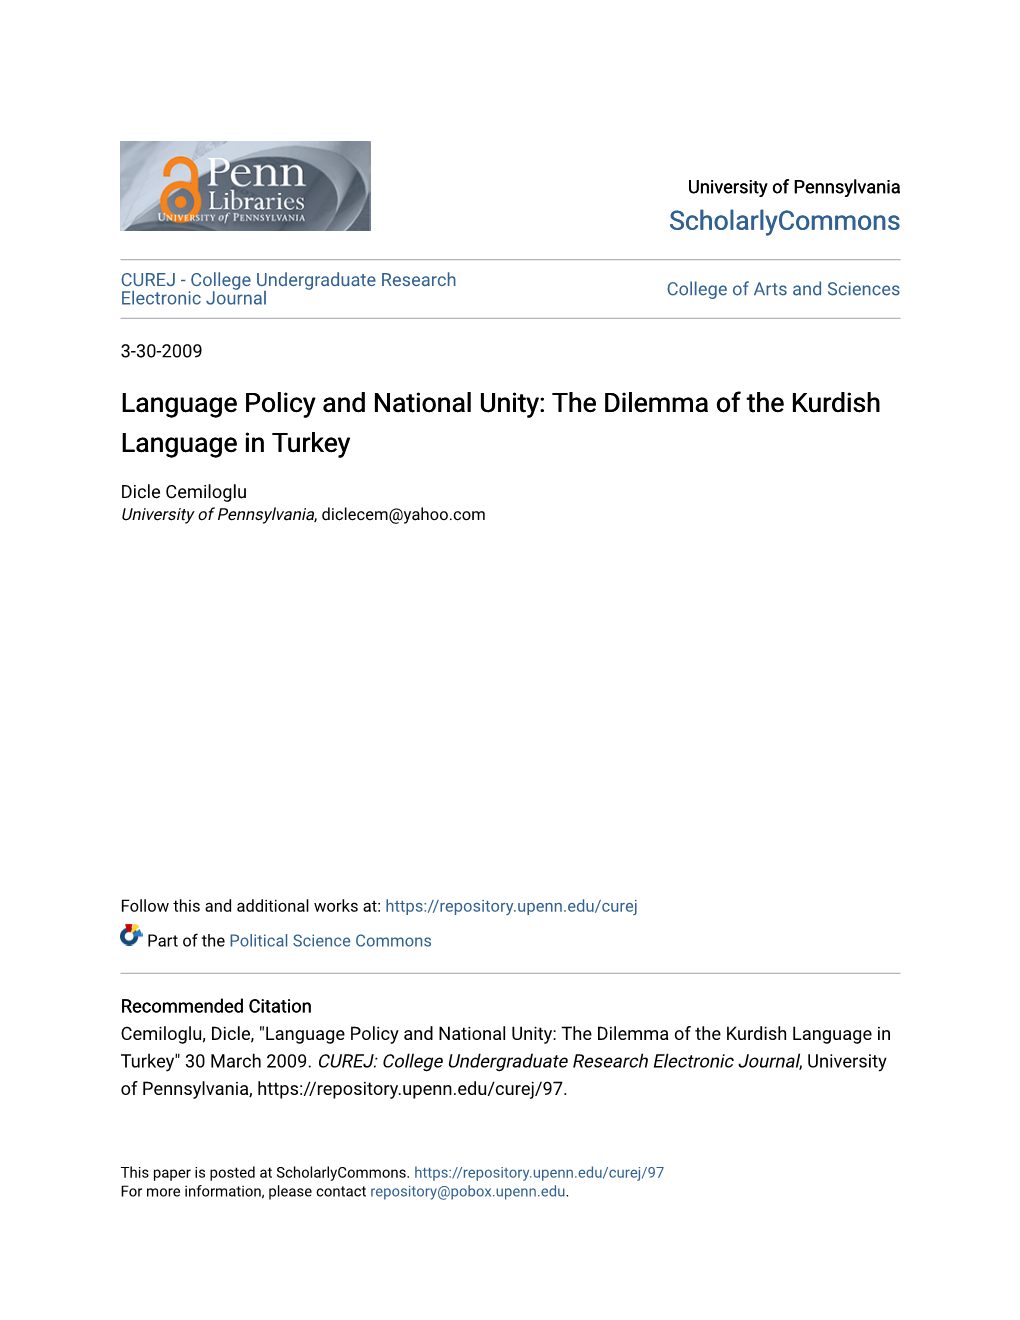 Language Policy and National Unity: the Dilemma of the Kurdish Language in Turkey